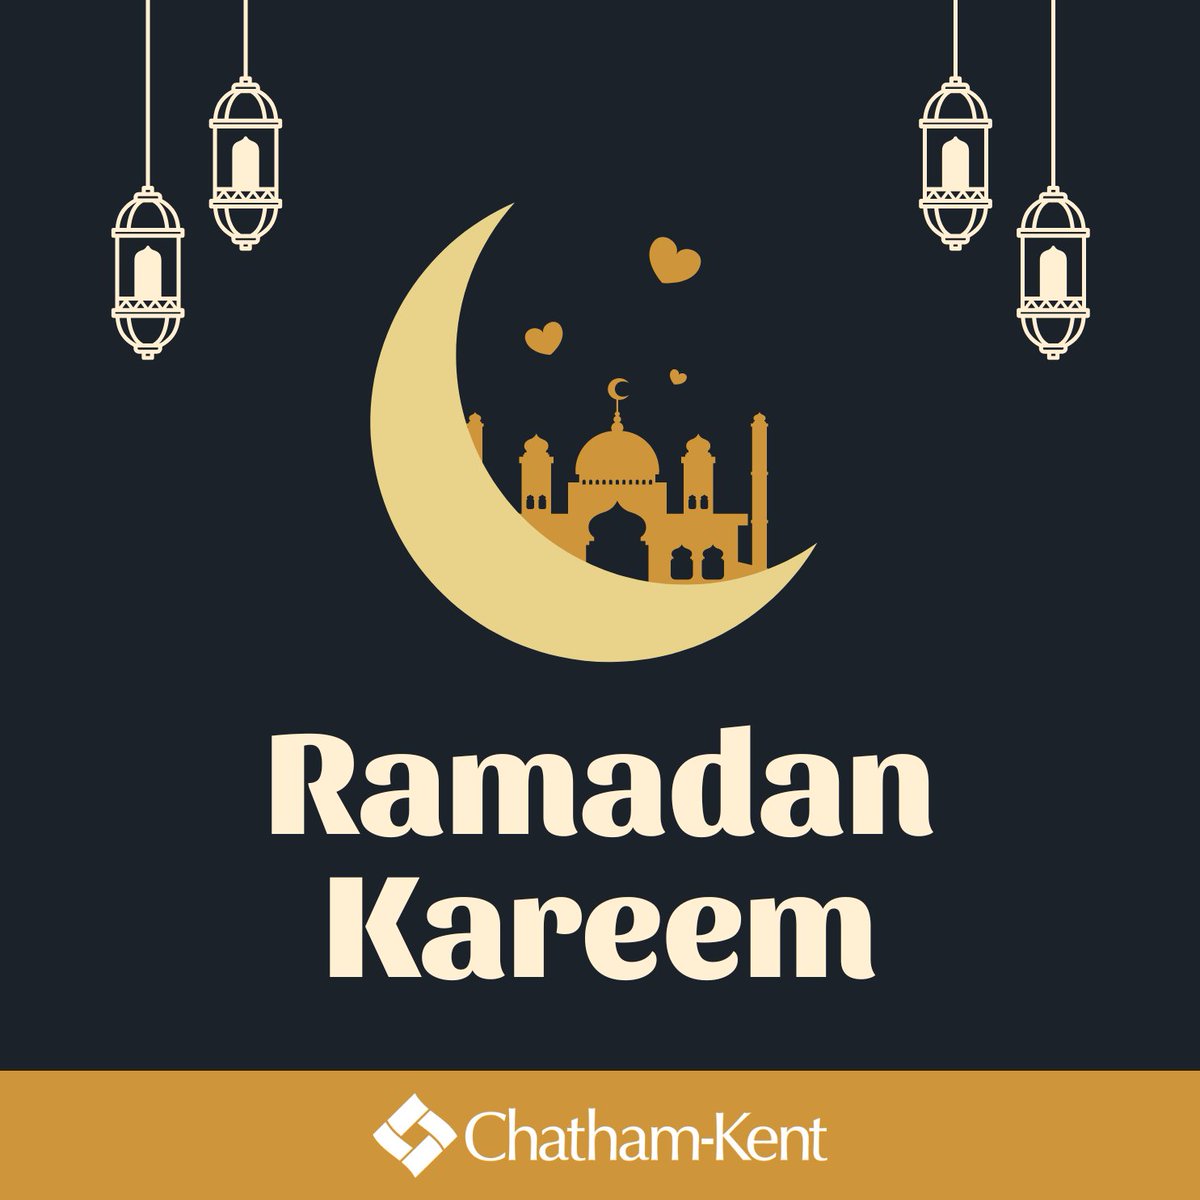 Ramadan Kareem. Wishing Muslim communities joy, blessing and peace through this holy season. #ckont